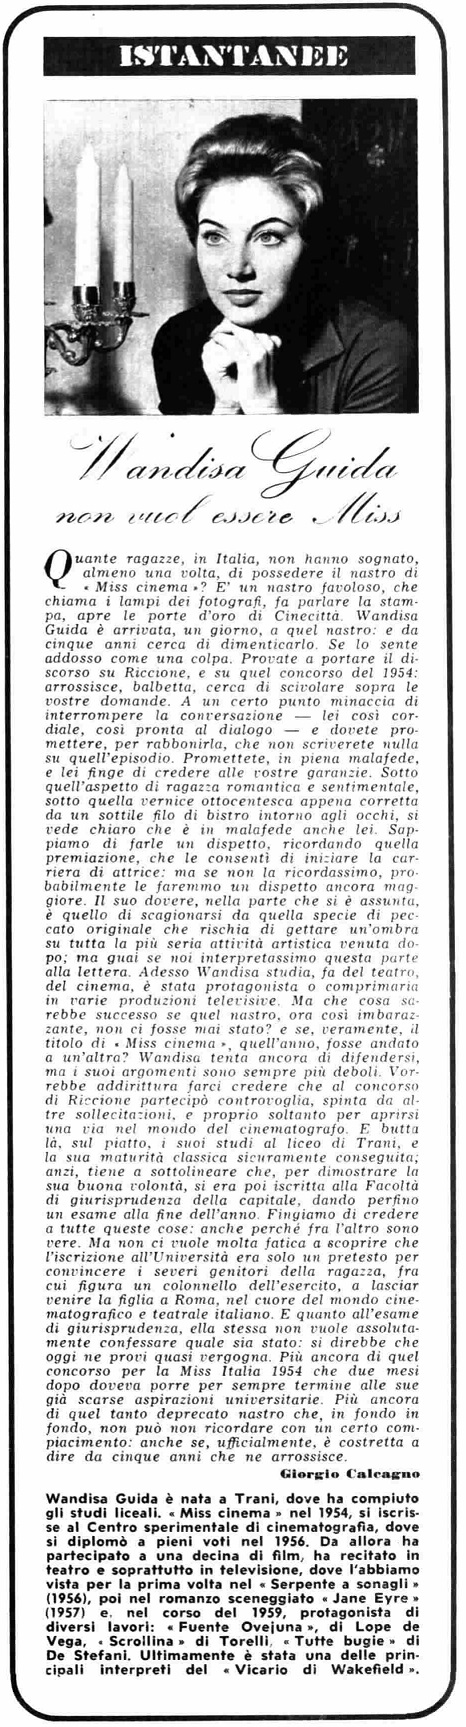 Radiocorriere 1 1960 - Wandisa Guida.jpg